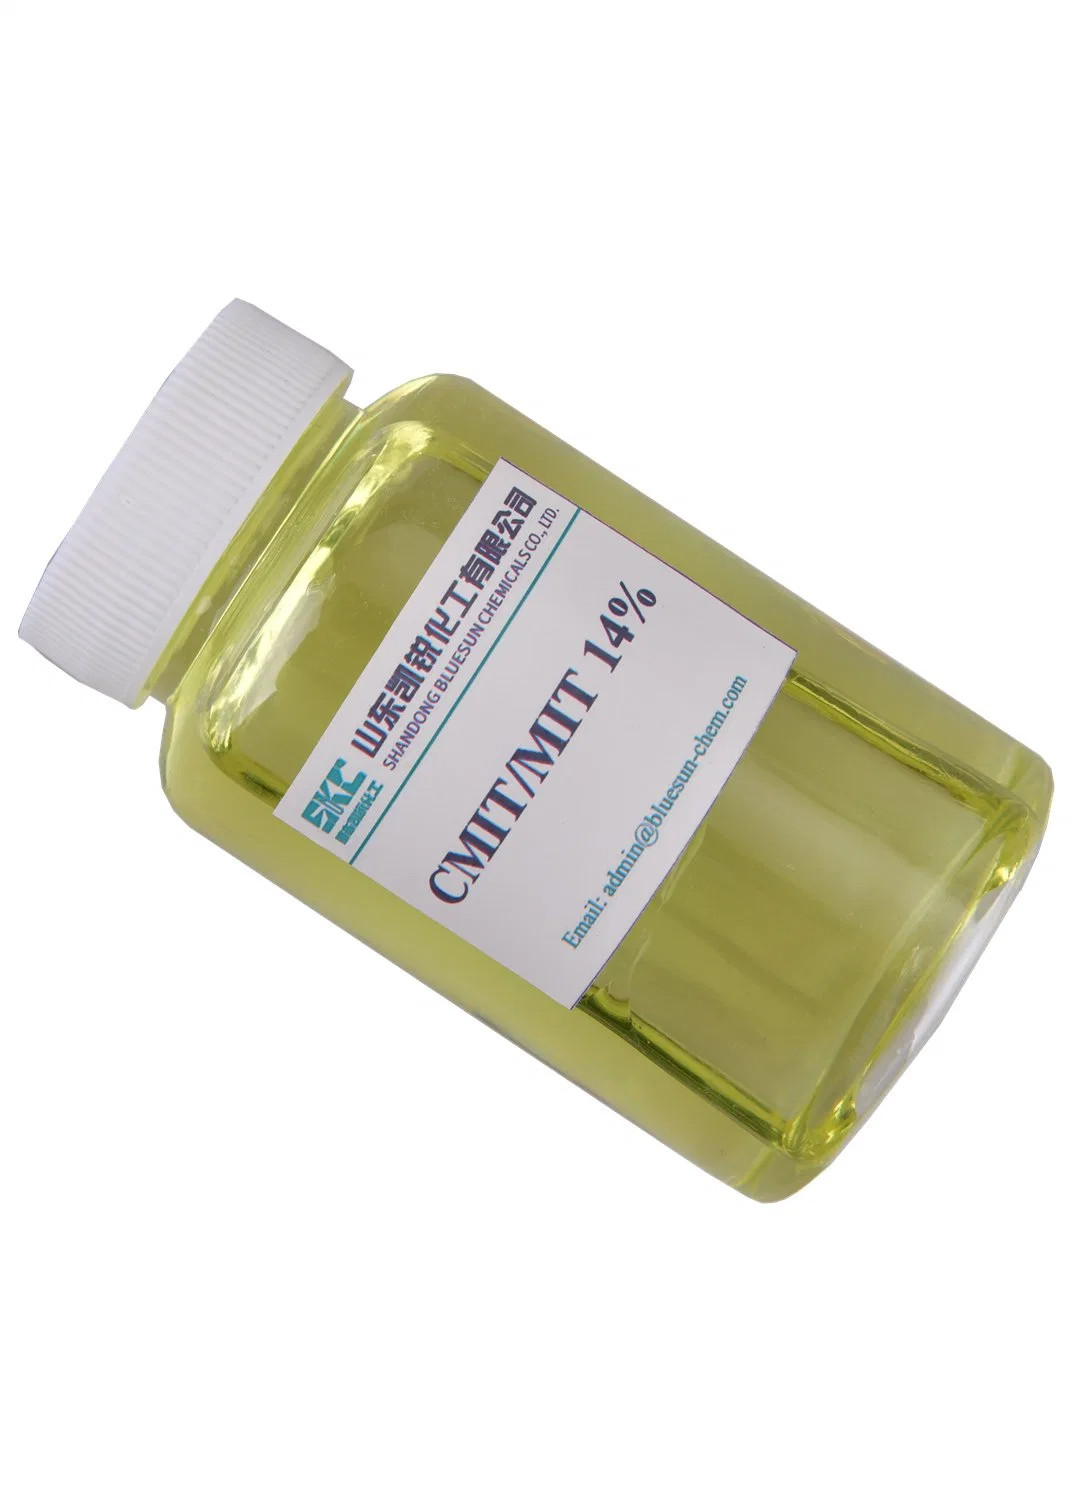 Cmit/Mit 14% Katon 886 Bactericidal and Algaecidal Agent